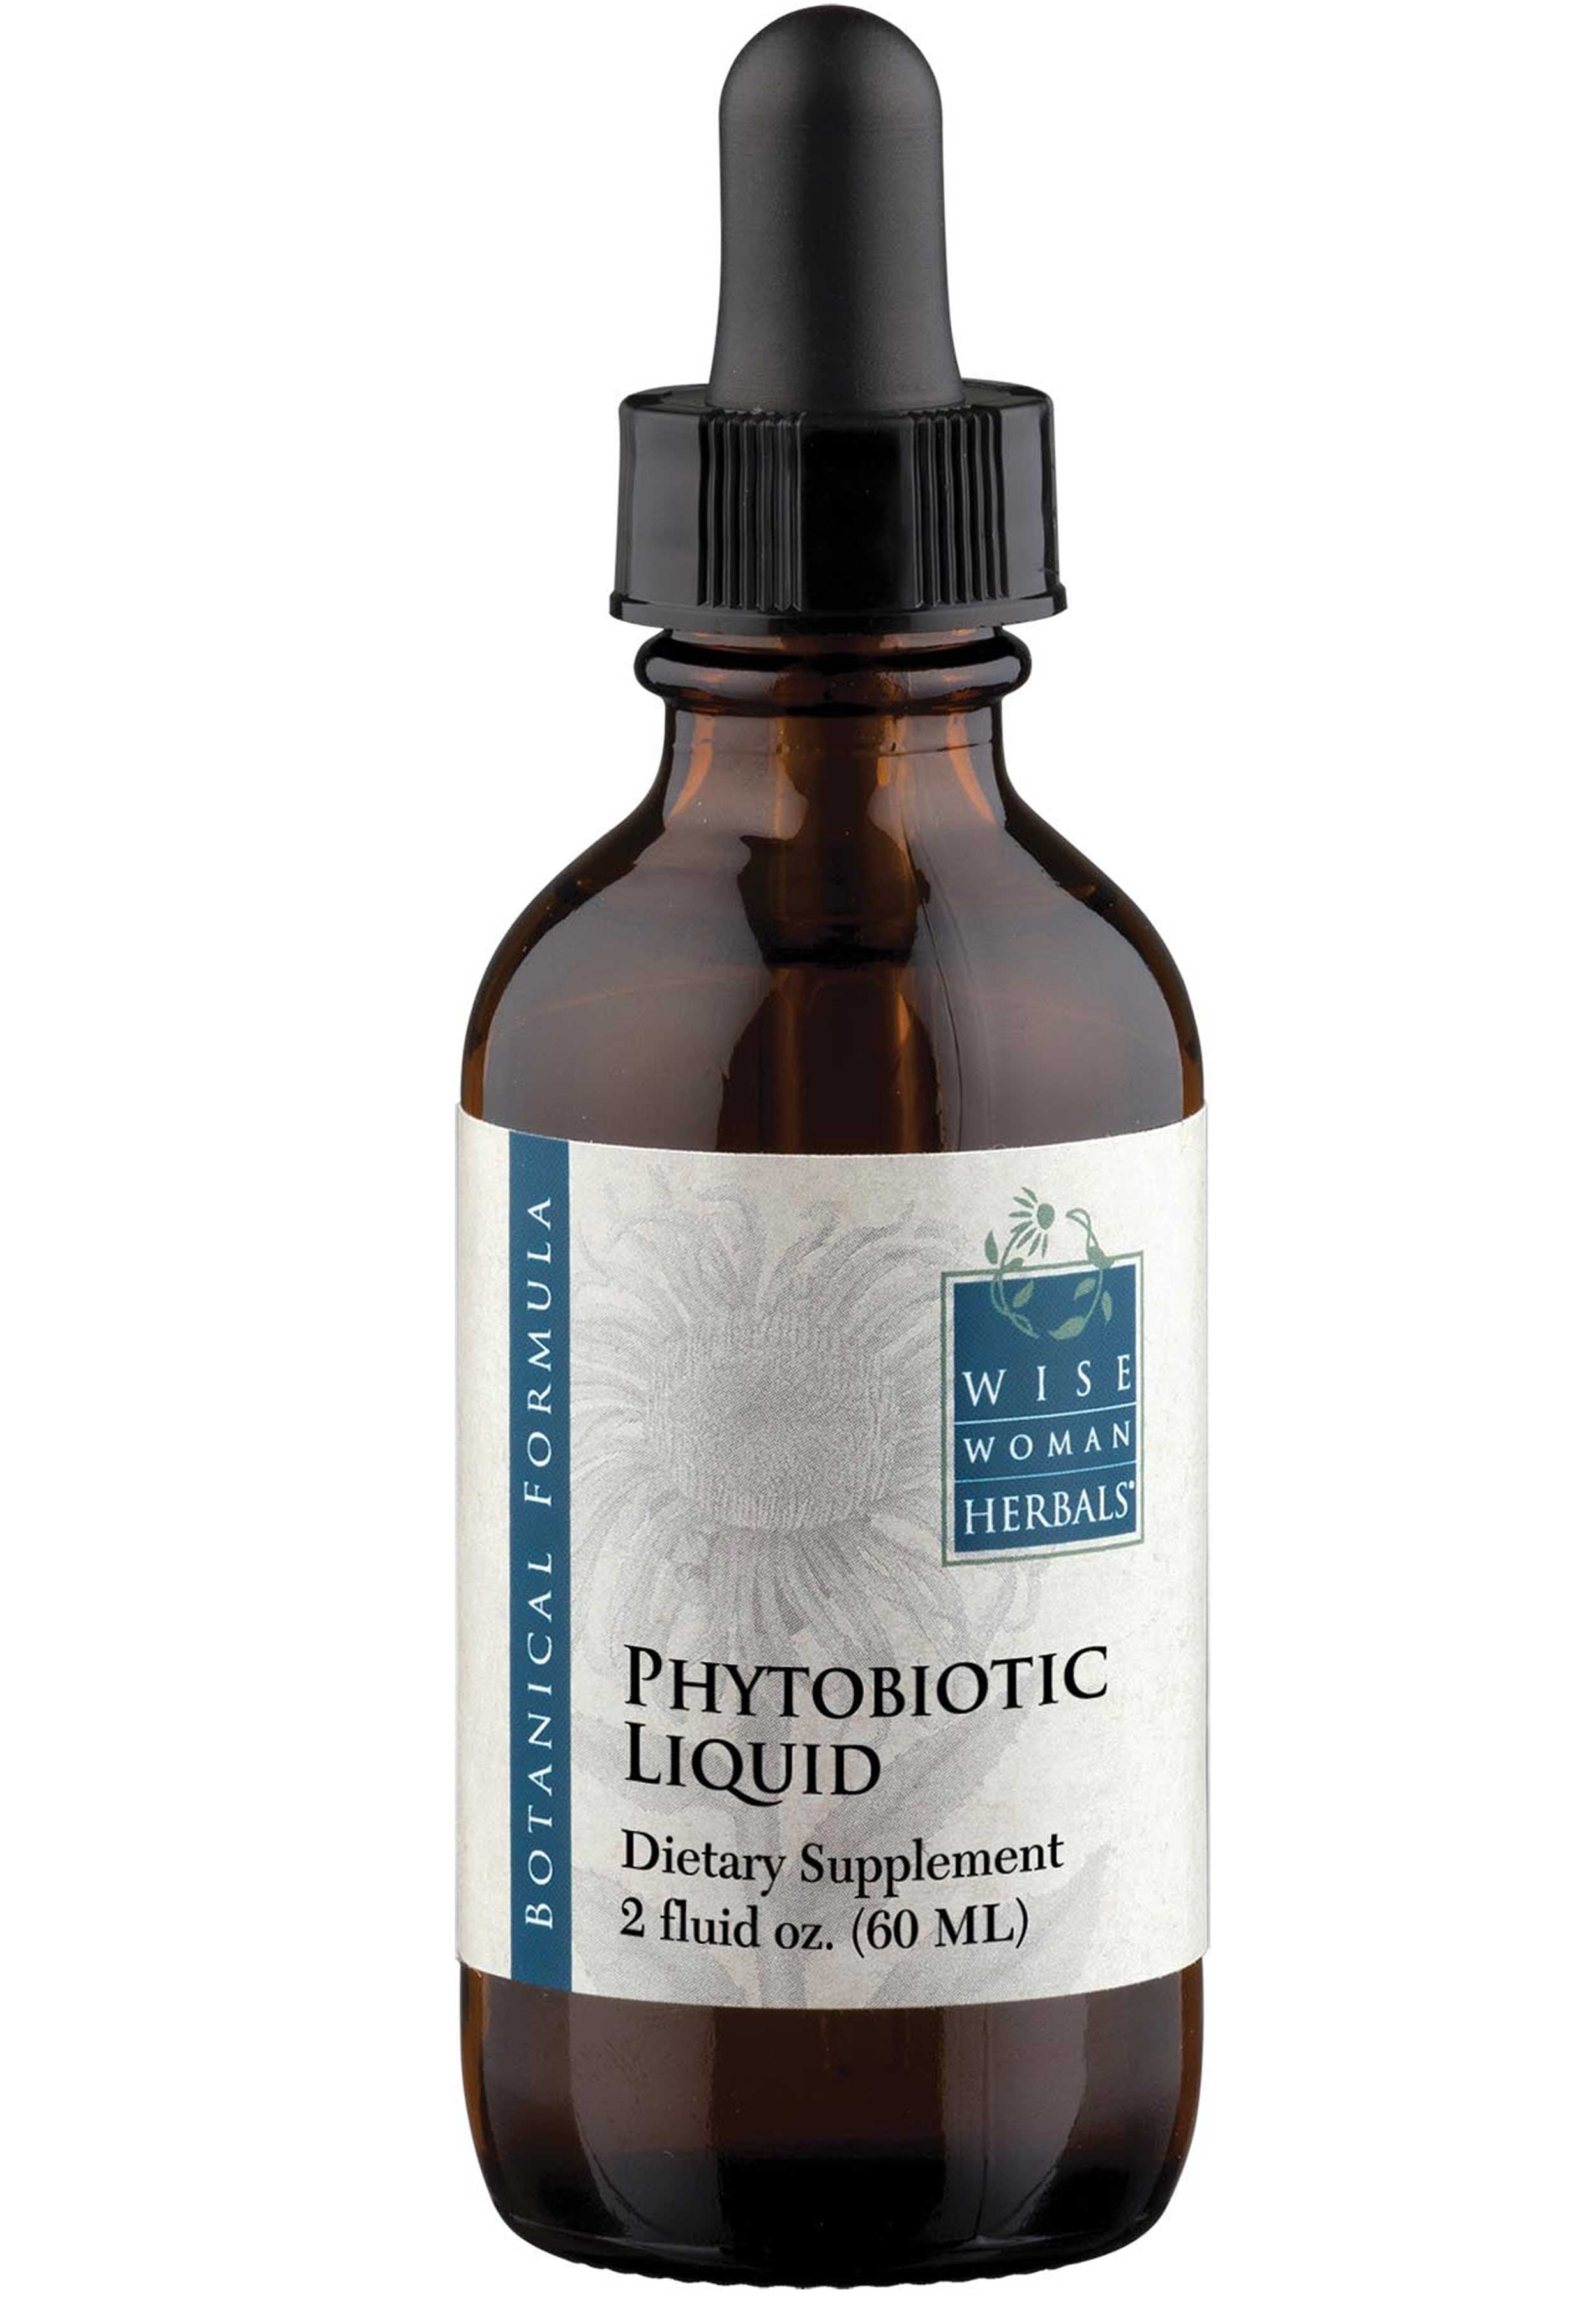 Wise Woman Herbals Phytobiotic Liquid